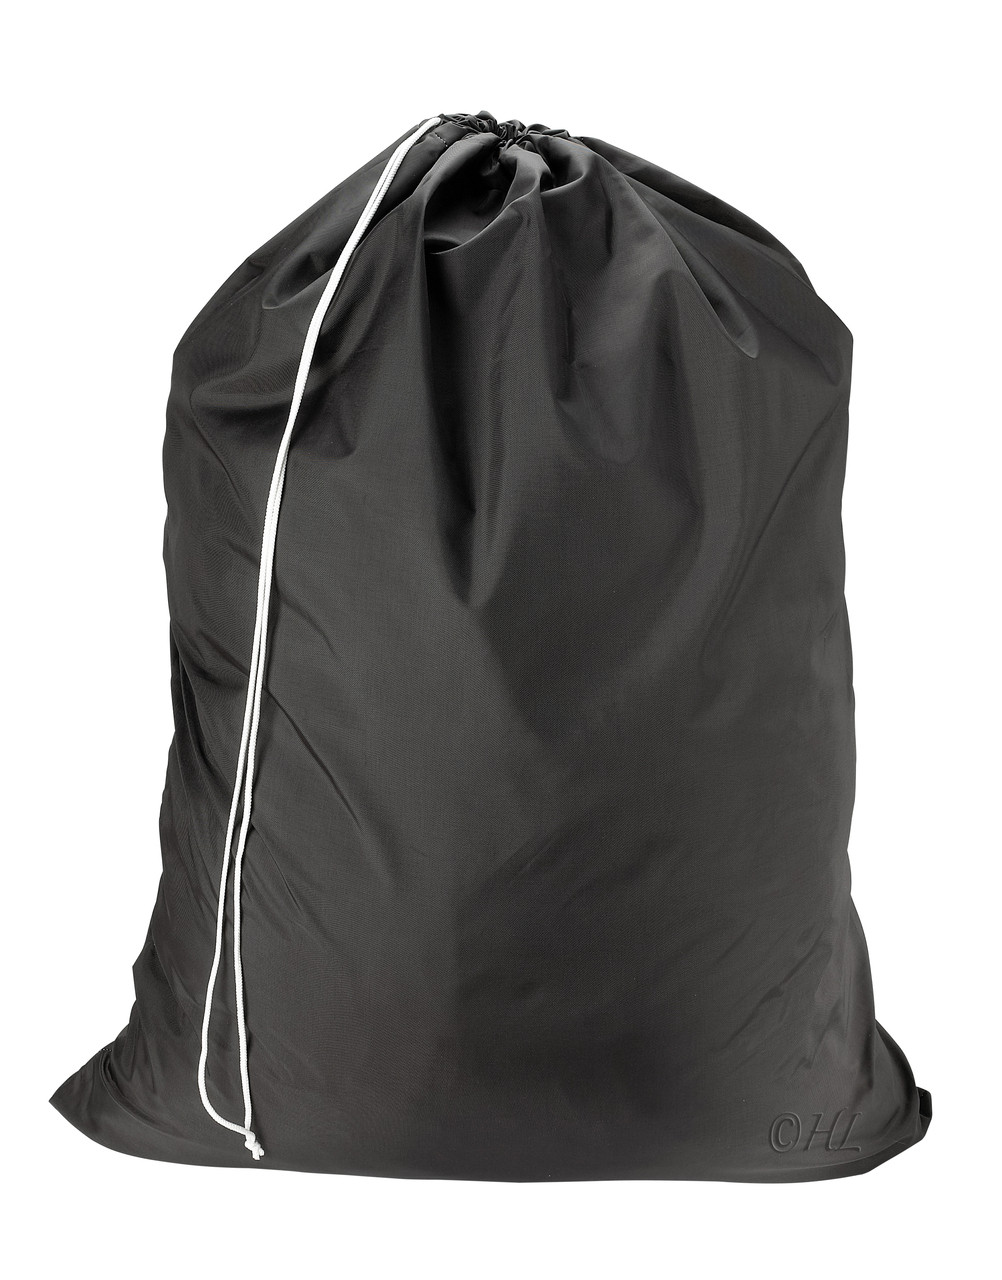 Dirty Clothes Mesh Bag, Home Laundry Bag, Travel Clothes Storage